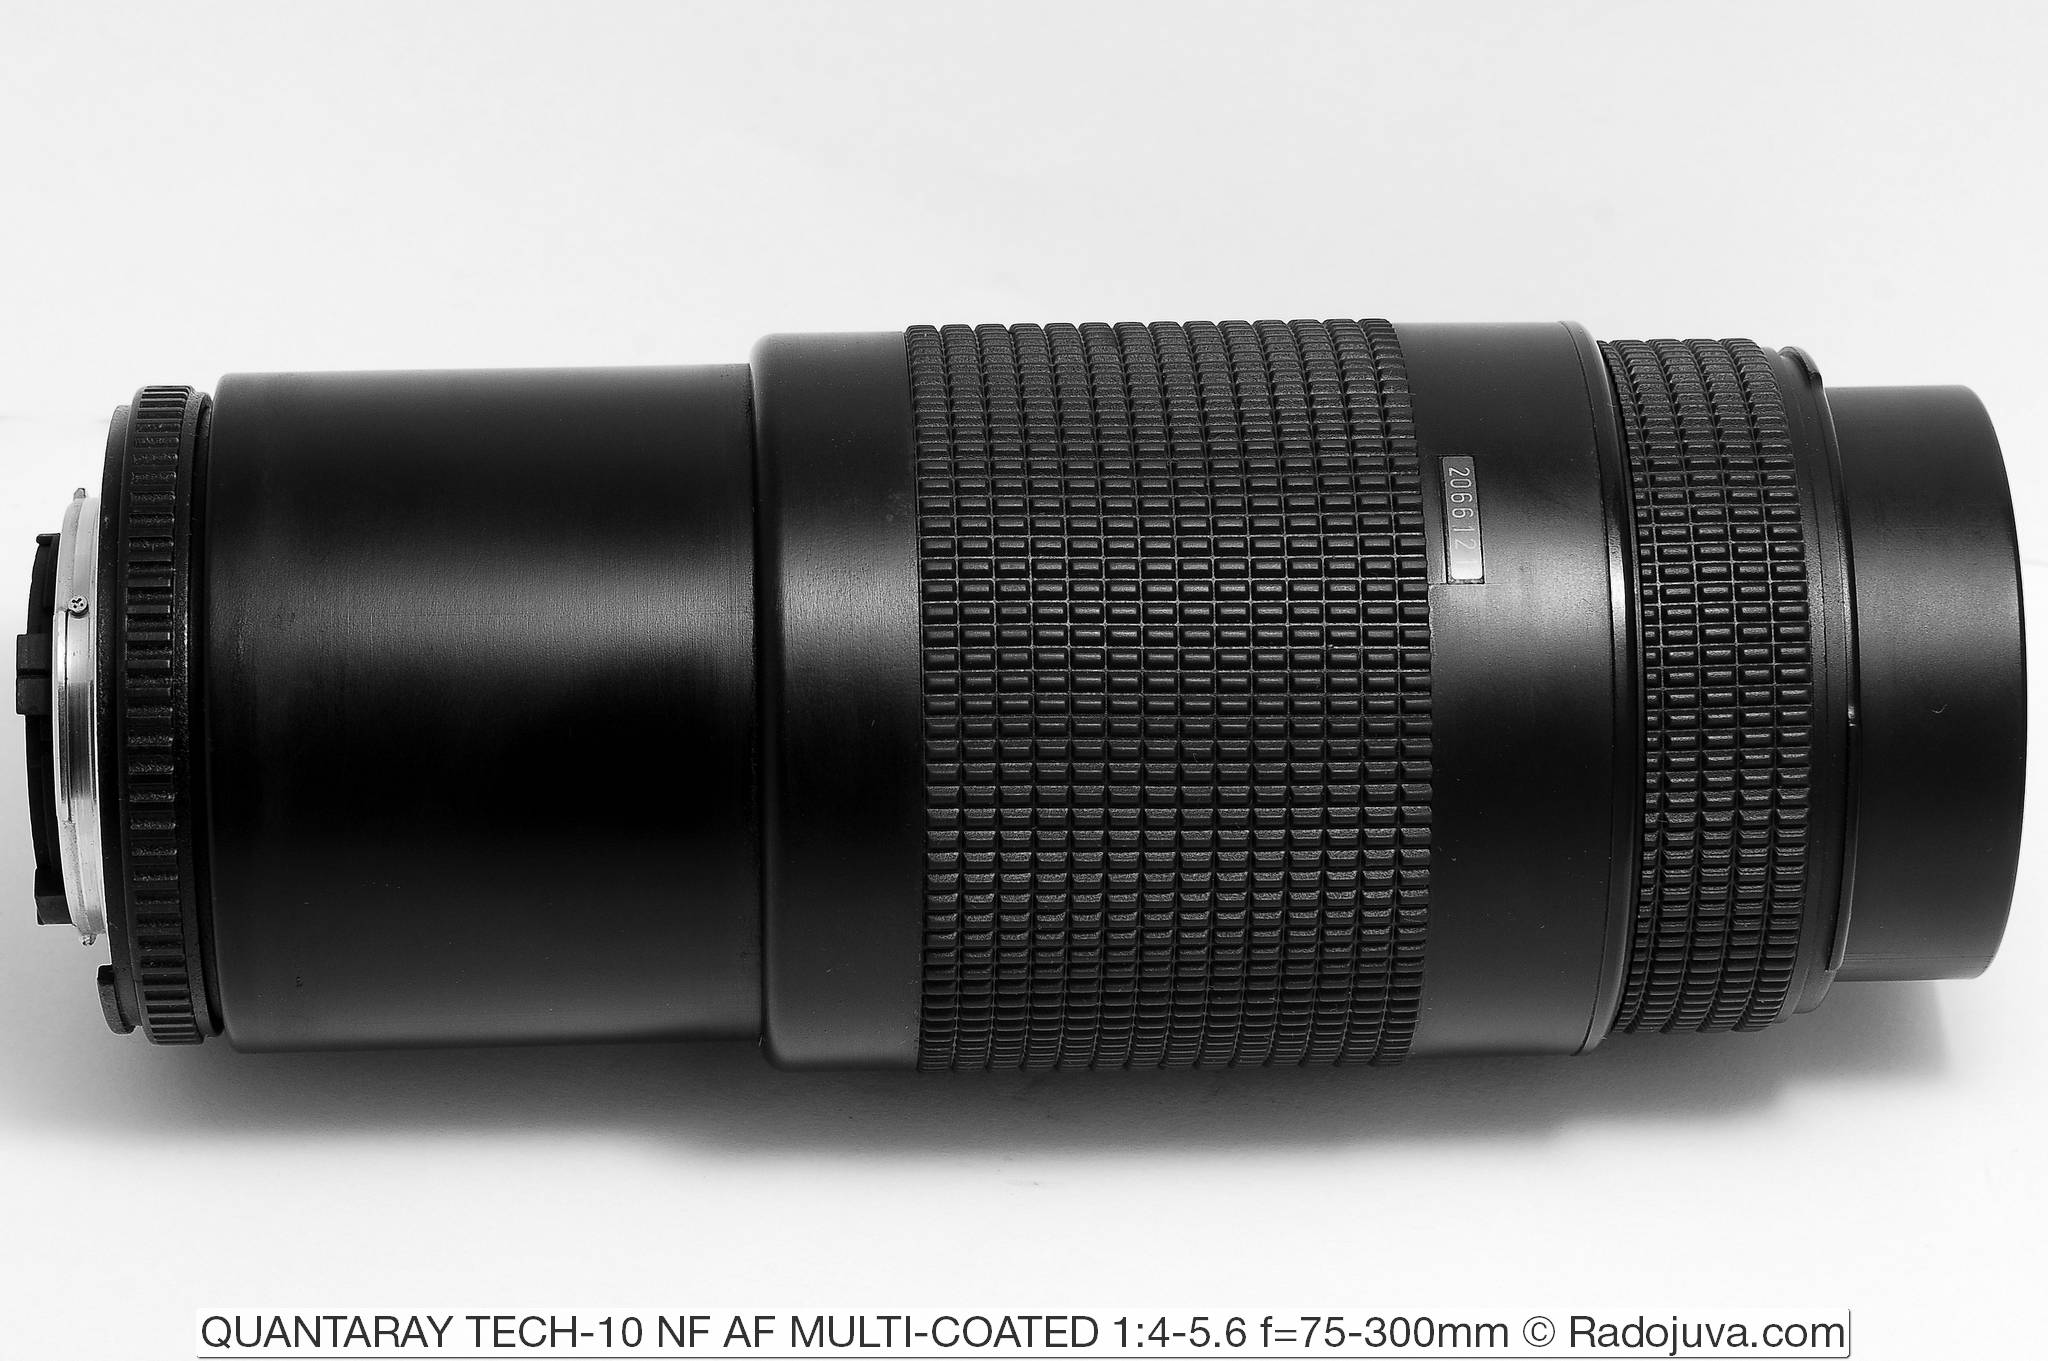 QUANTARAY TECH-10 NF AF MULTI-COATED 1:4-5.6 f=75-300mm